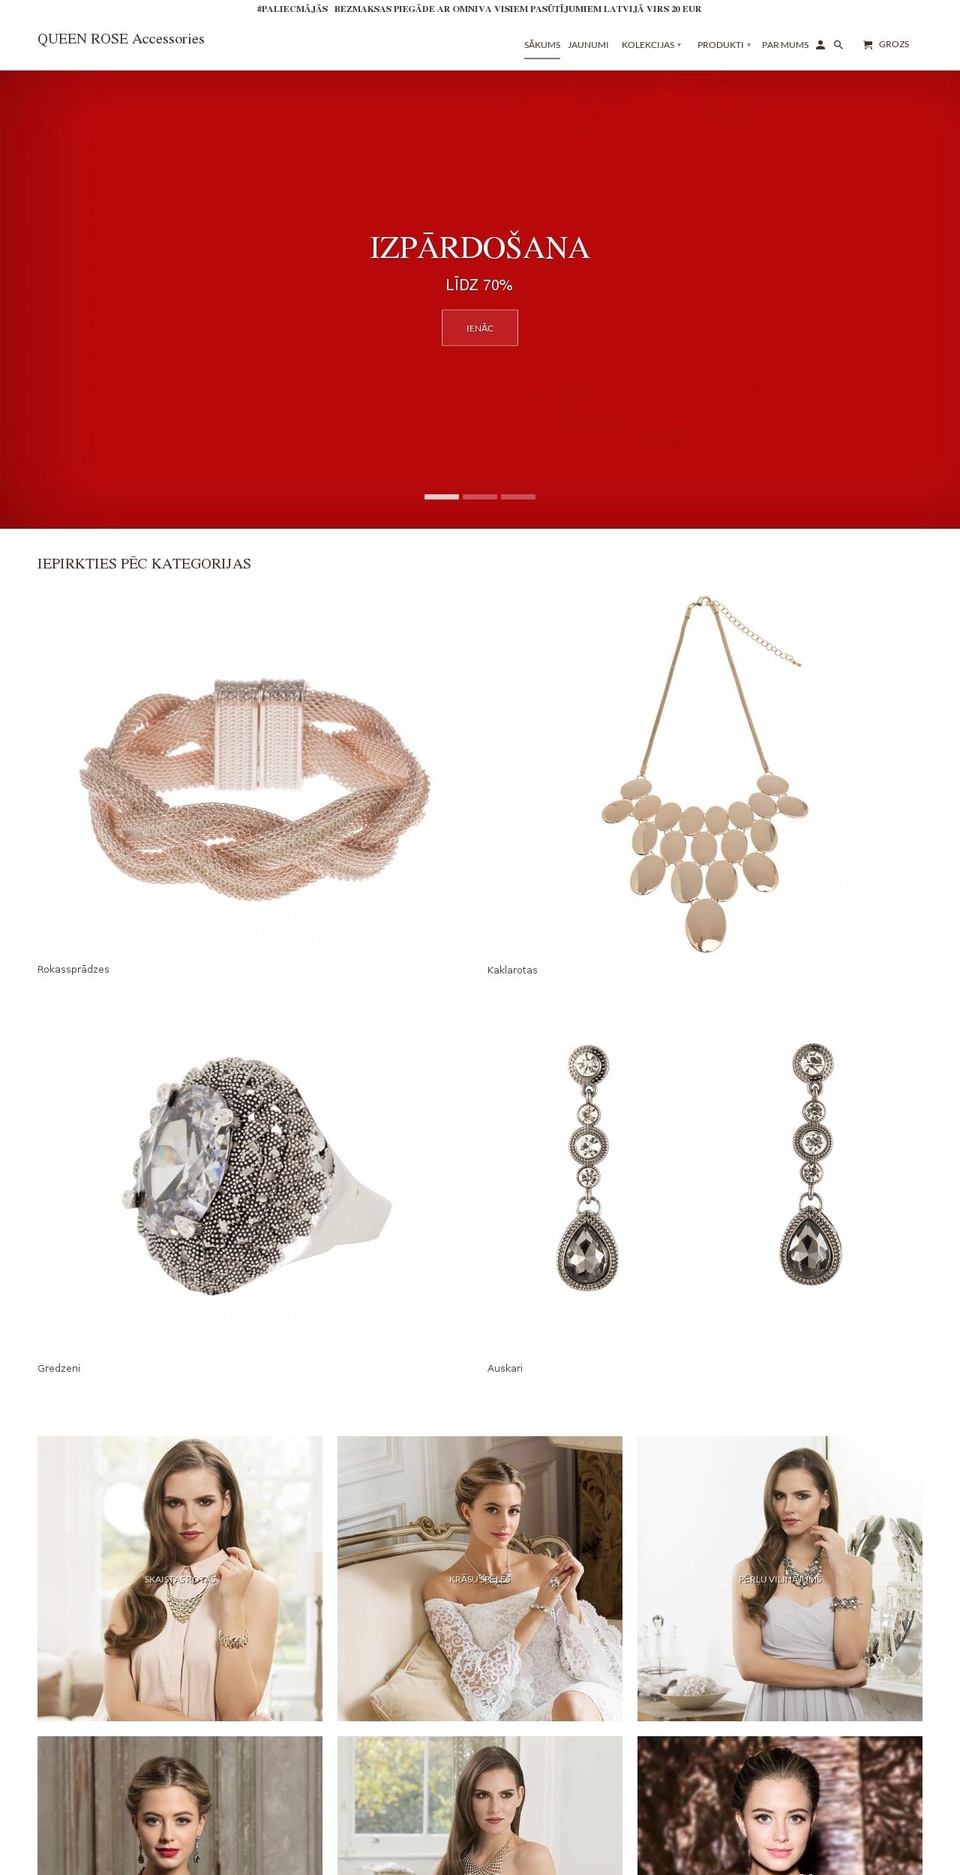 queenrose.lv shopify website screenshot